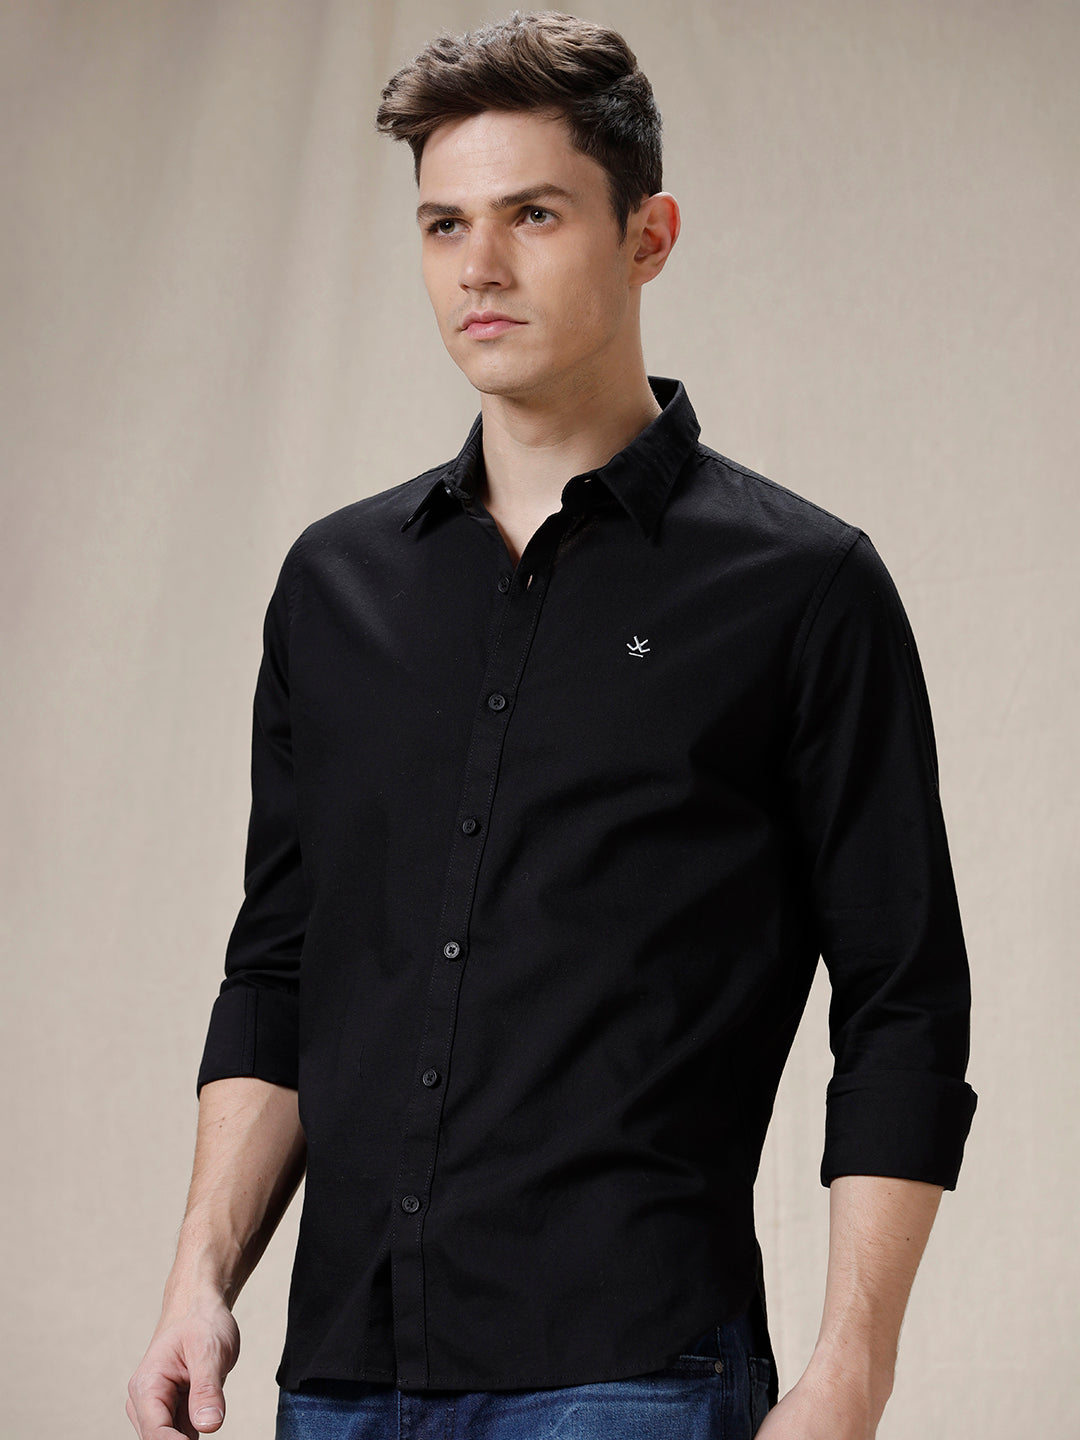 Basic Black Solid Shirt